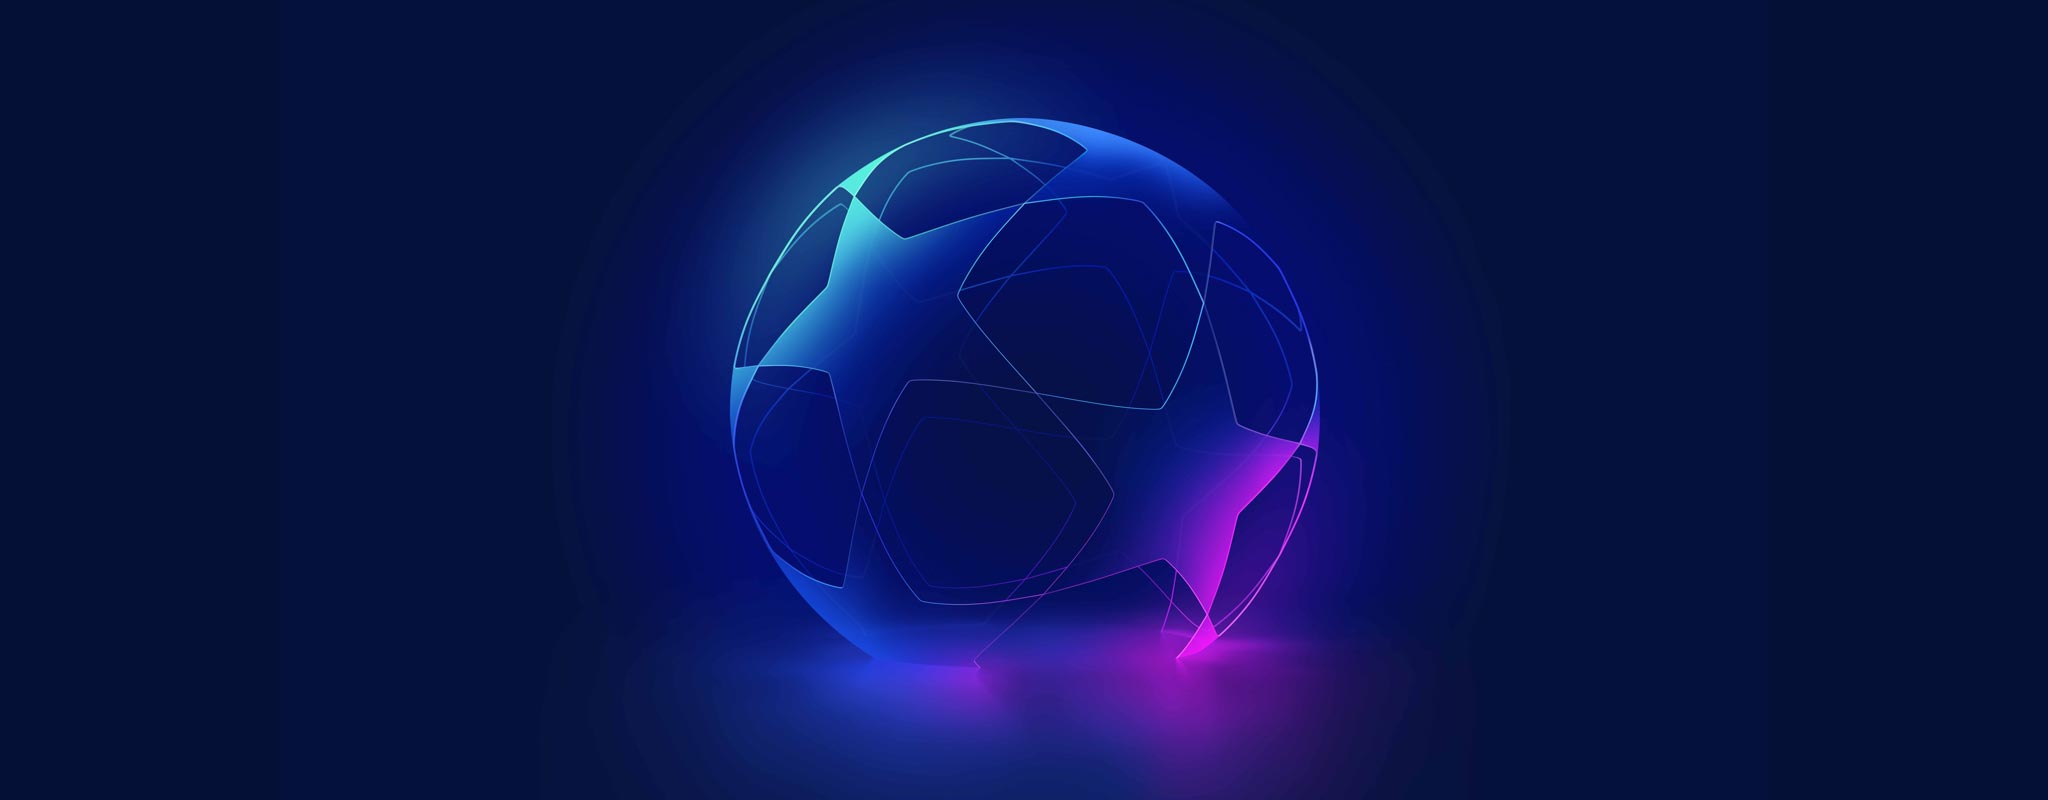 uefa wallpaper,blue,ball,electric blue,soccer ball,football